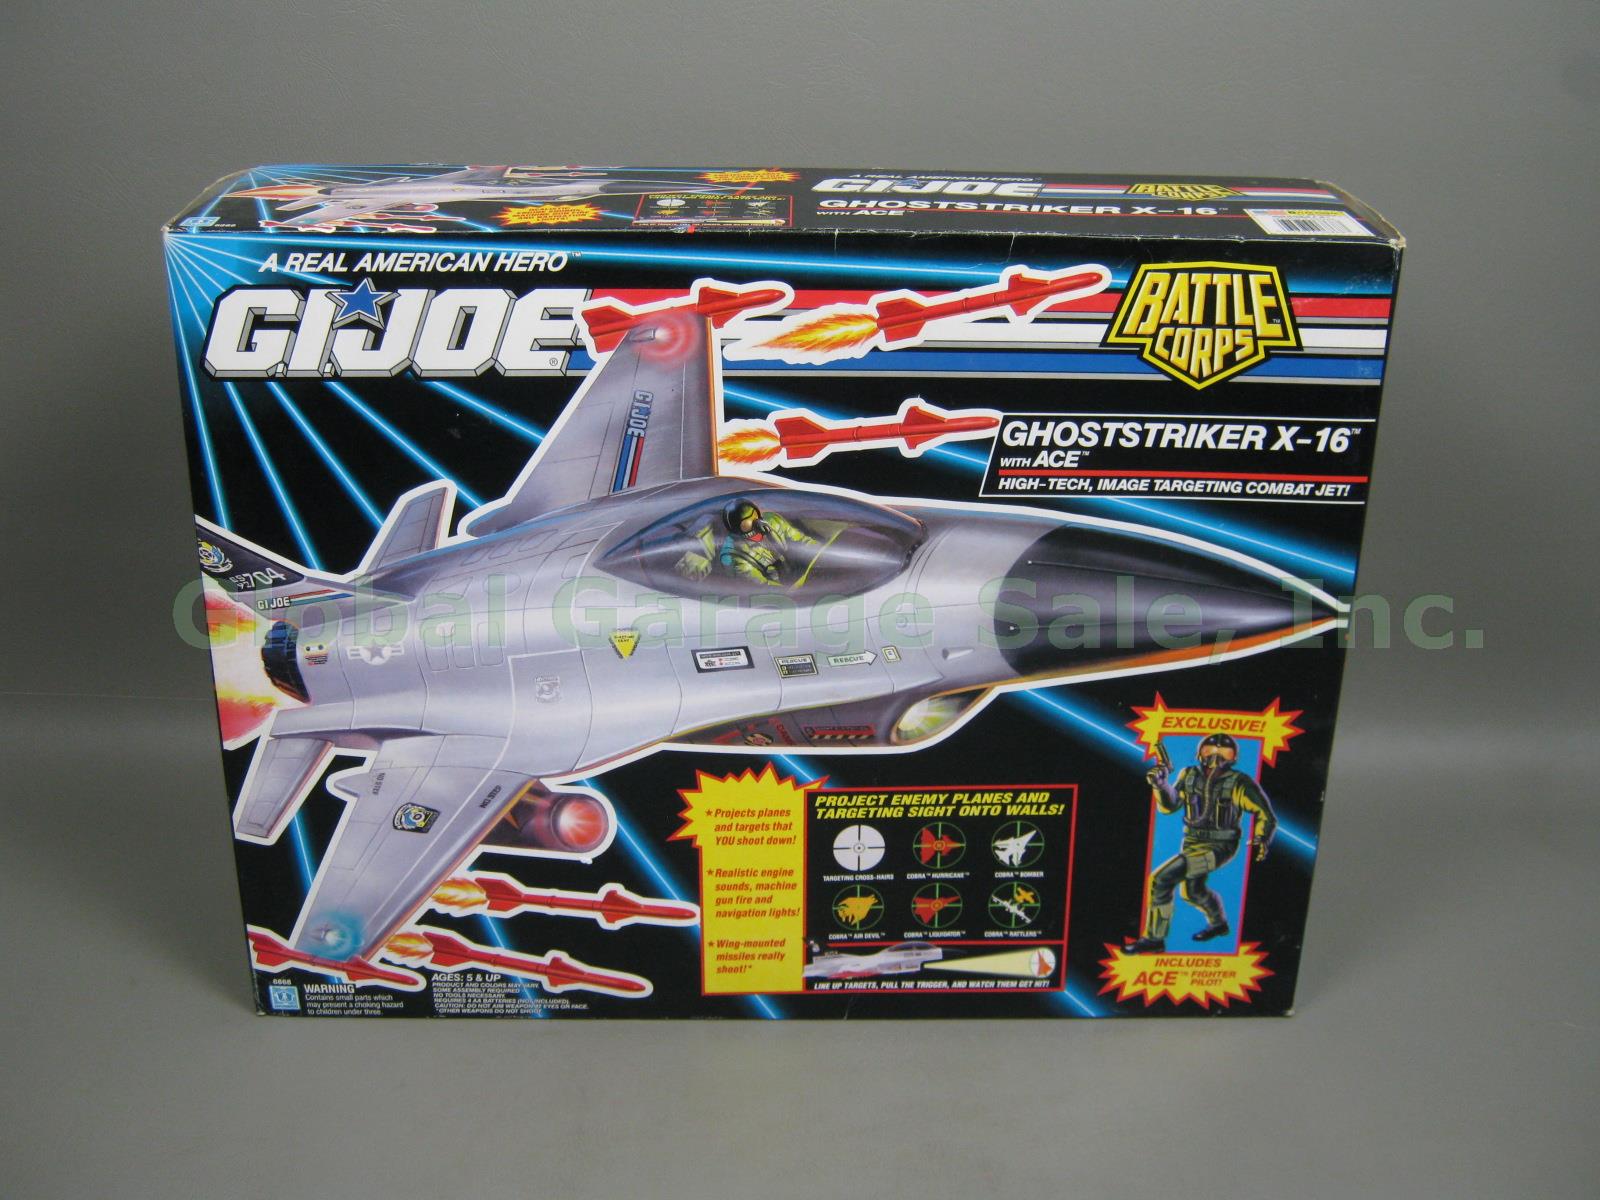 NIB 1992 GI Joe Battle Corps Ghoststriker X-16 Jet W/ Ace Fighter Pilot Figure